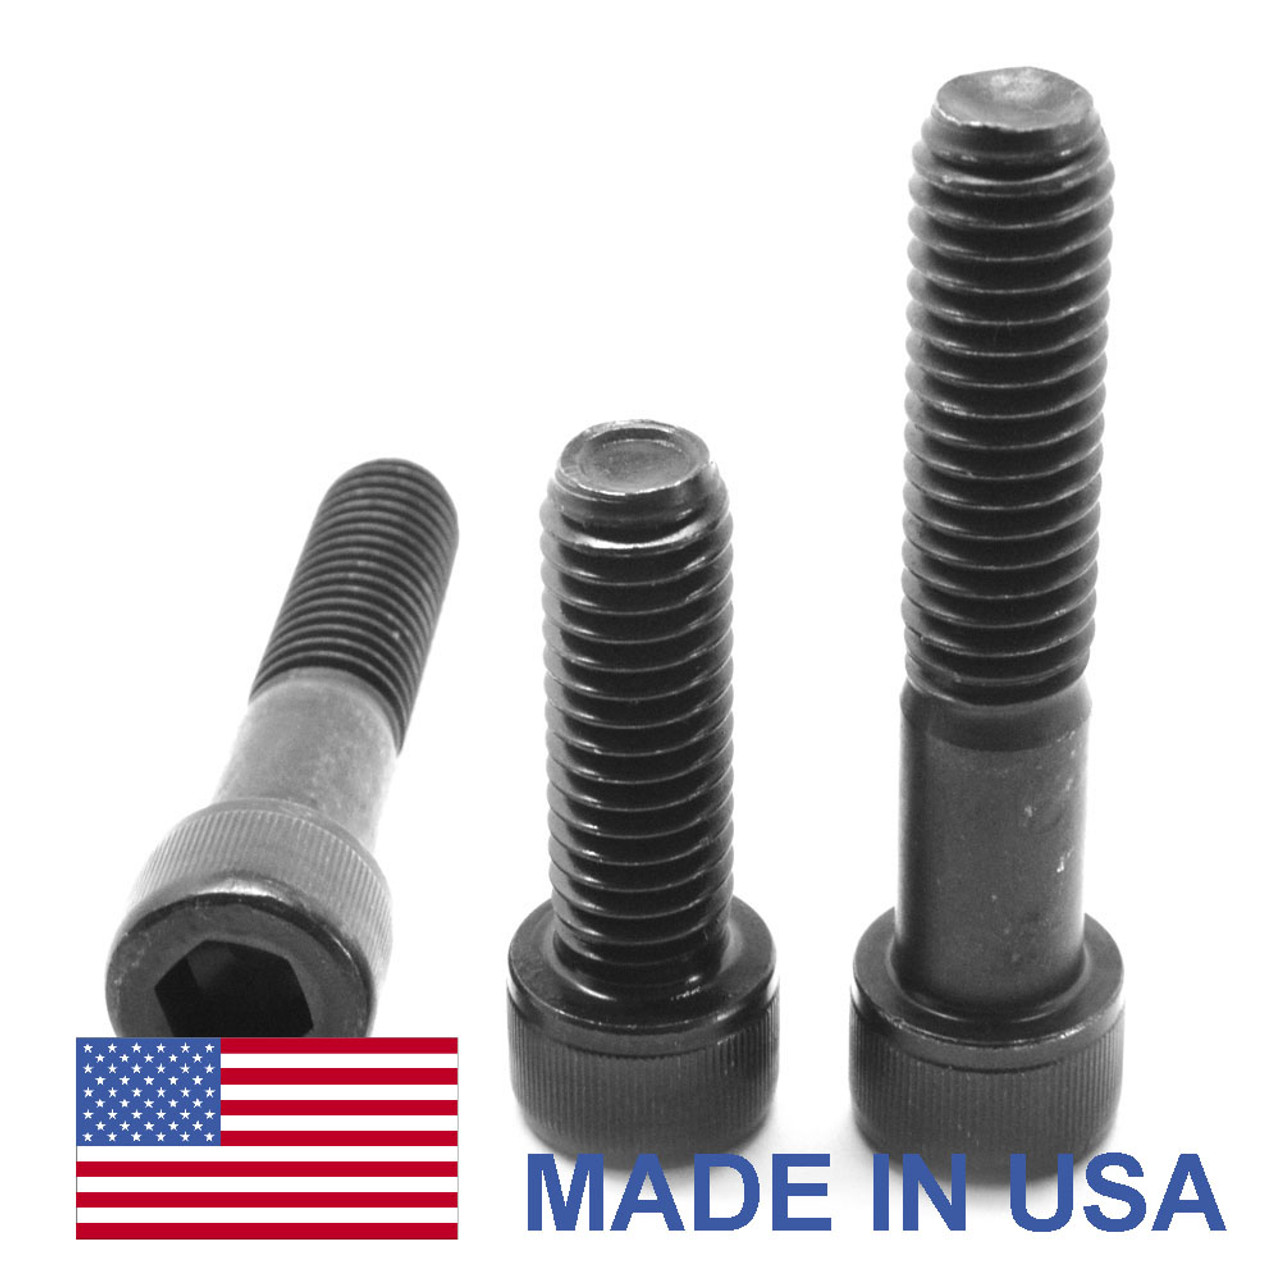 7/16-14 x 3 Coarse Thread Socket Head Cap Screw - USA Alloy Steel Black Oxide